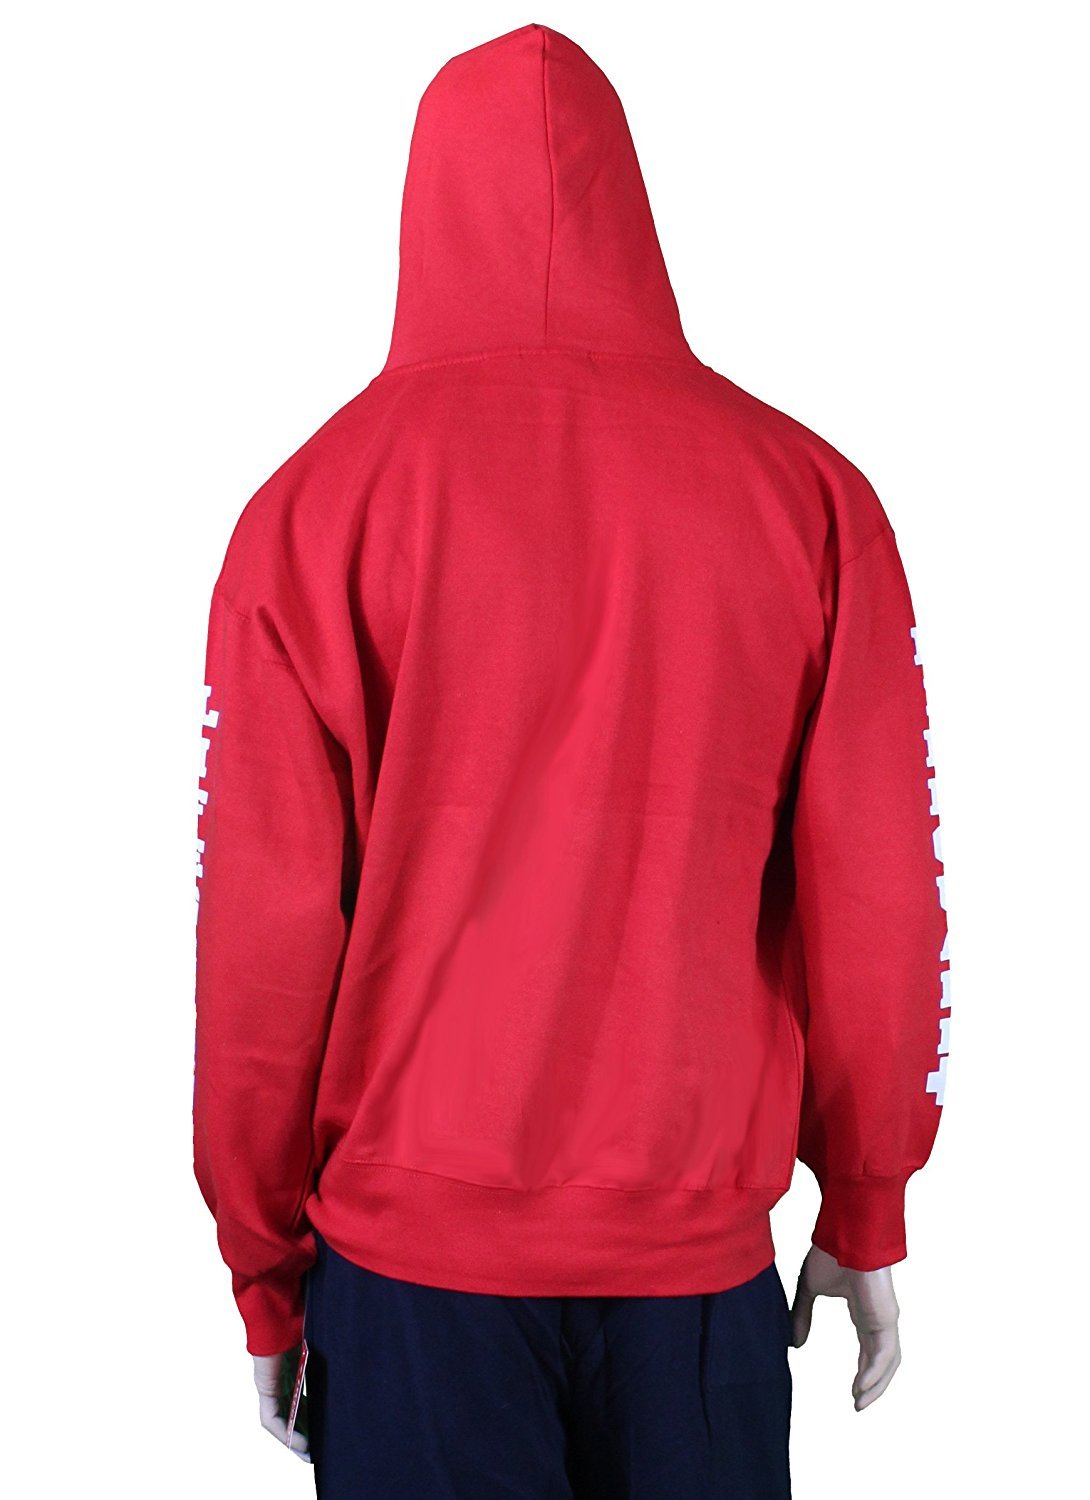 Lifeguard Hoodie Sweatshirt New York City Red